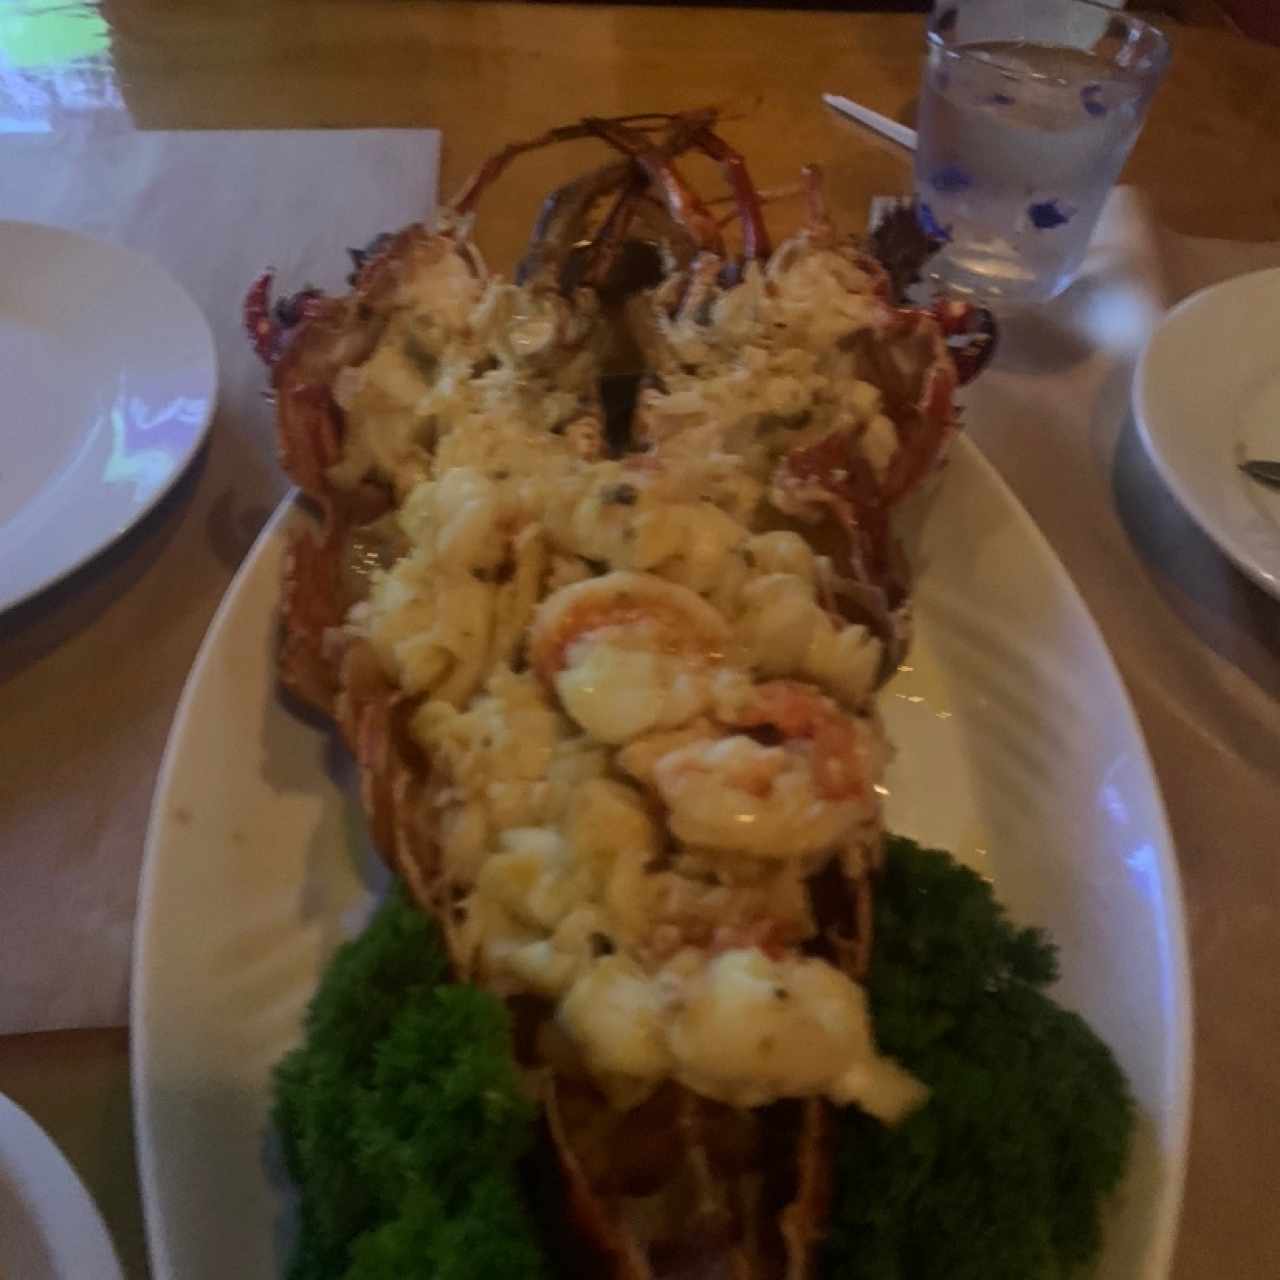 More Lobster